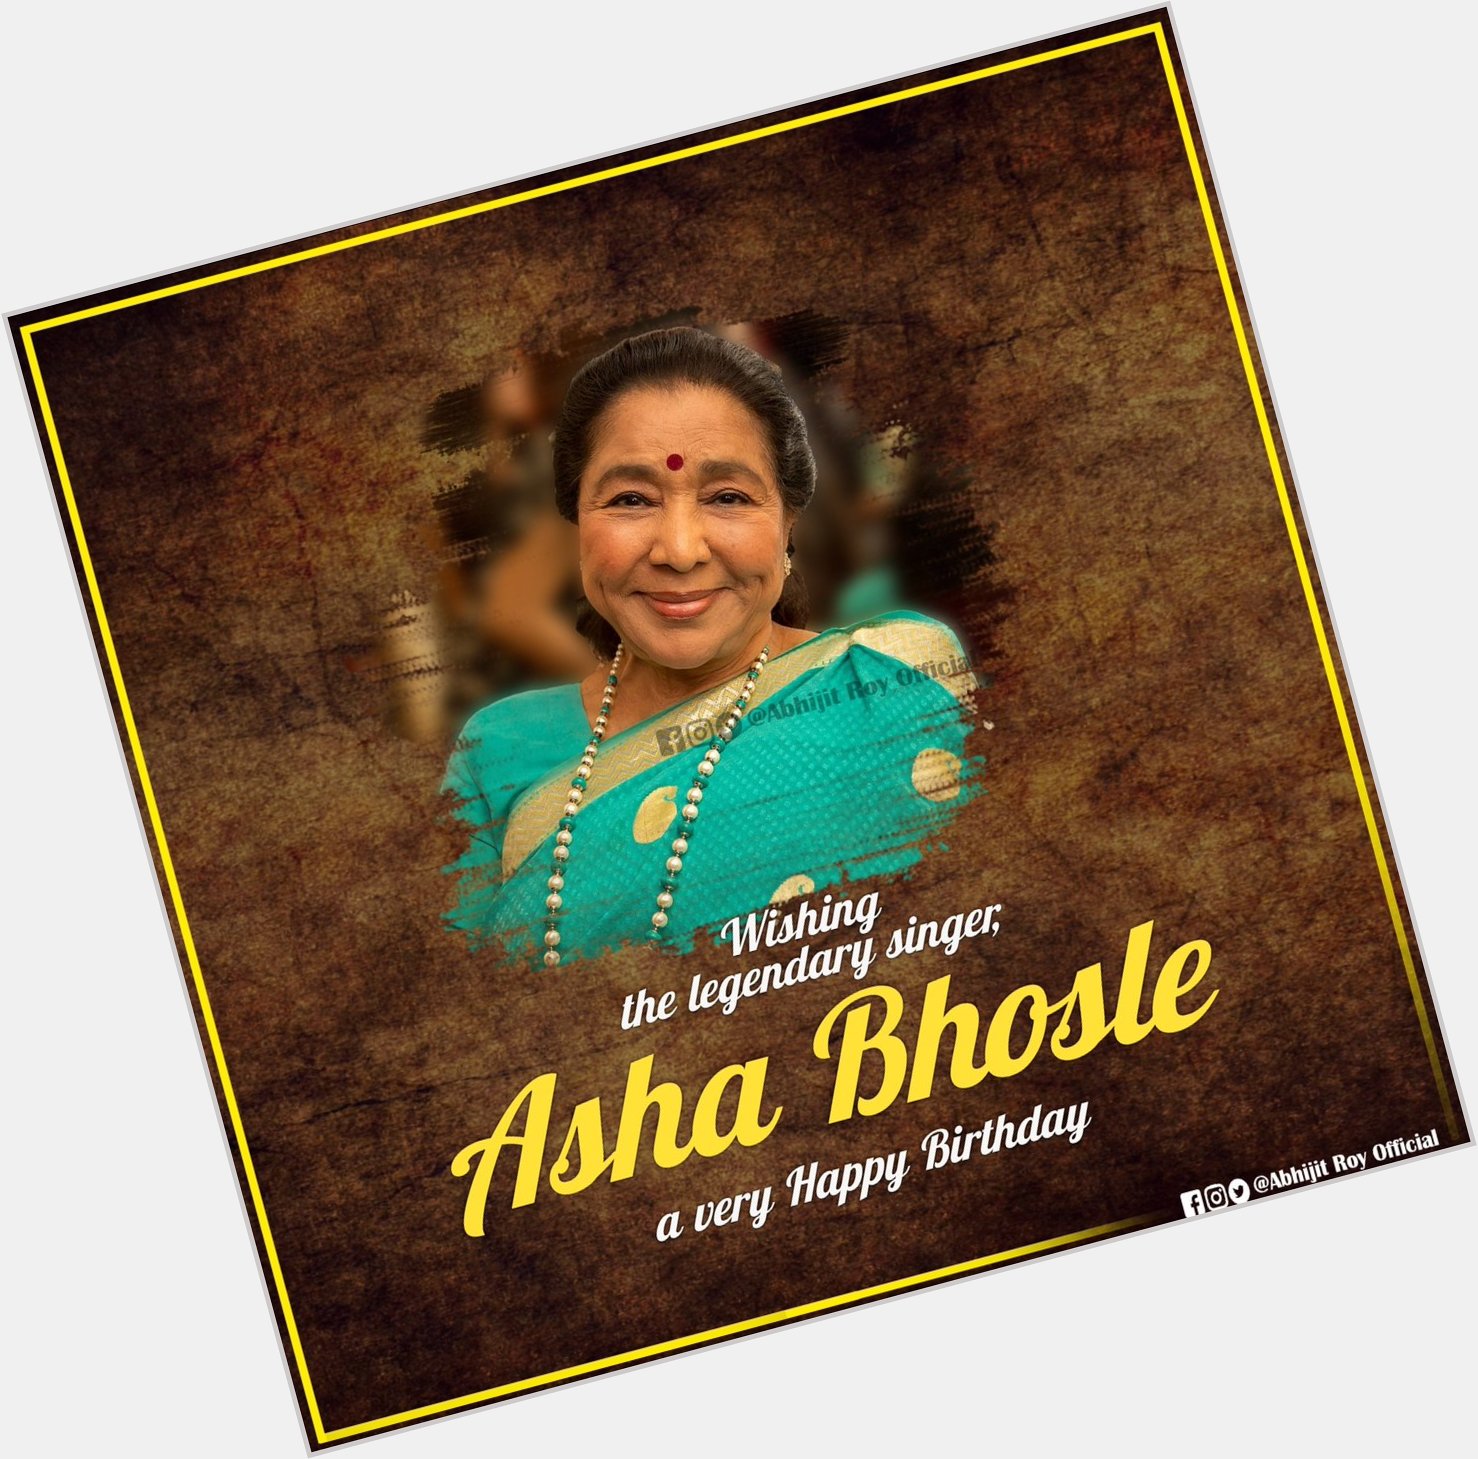 Wishing the legendary singer, Asha Bhosle a very happy birthday   